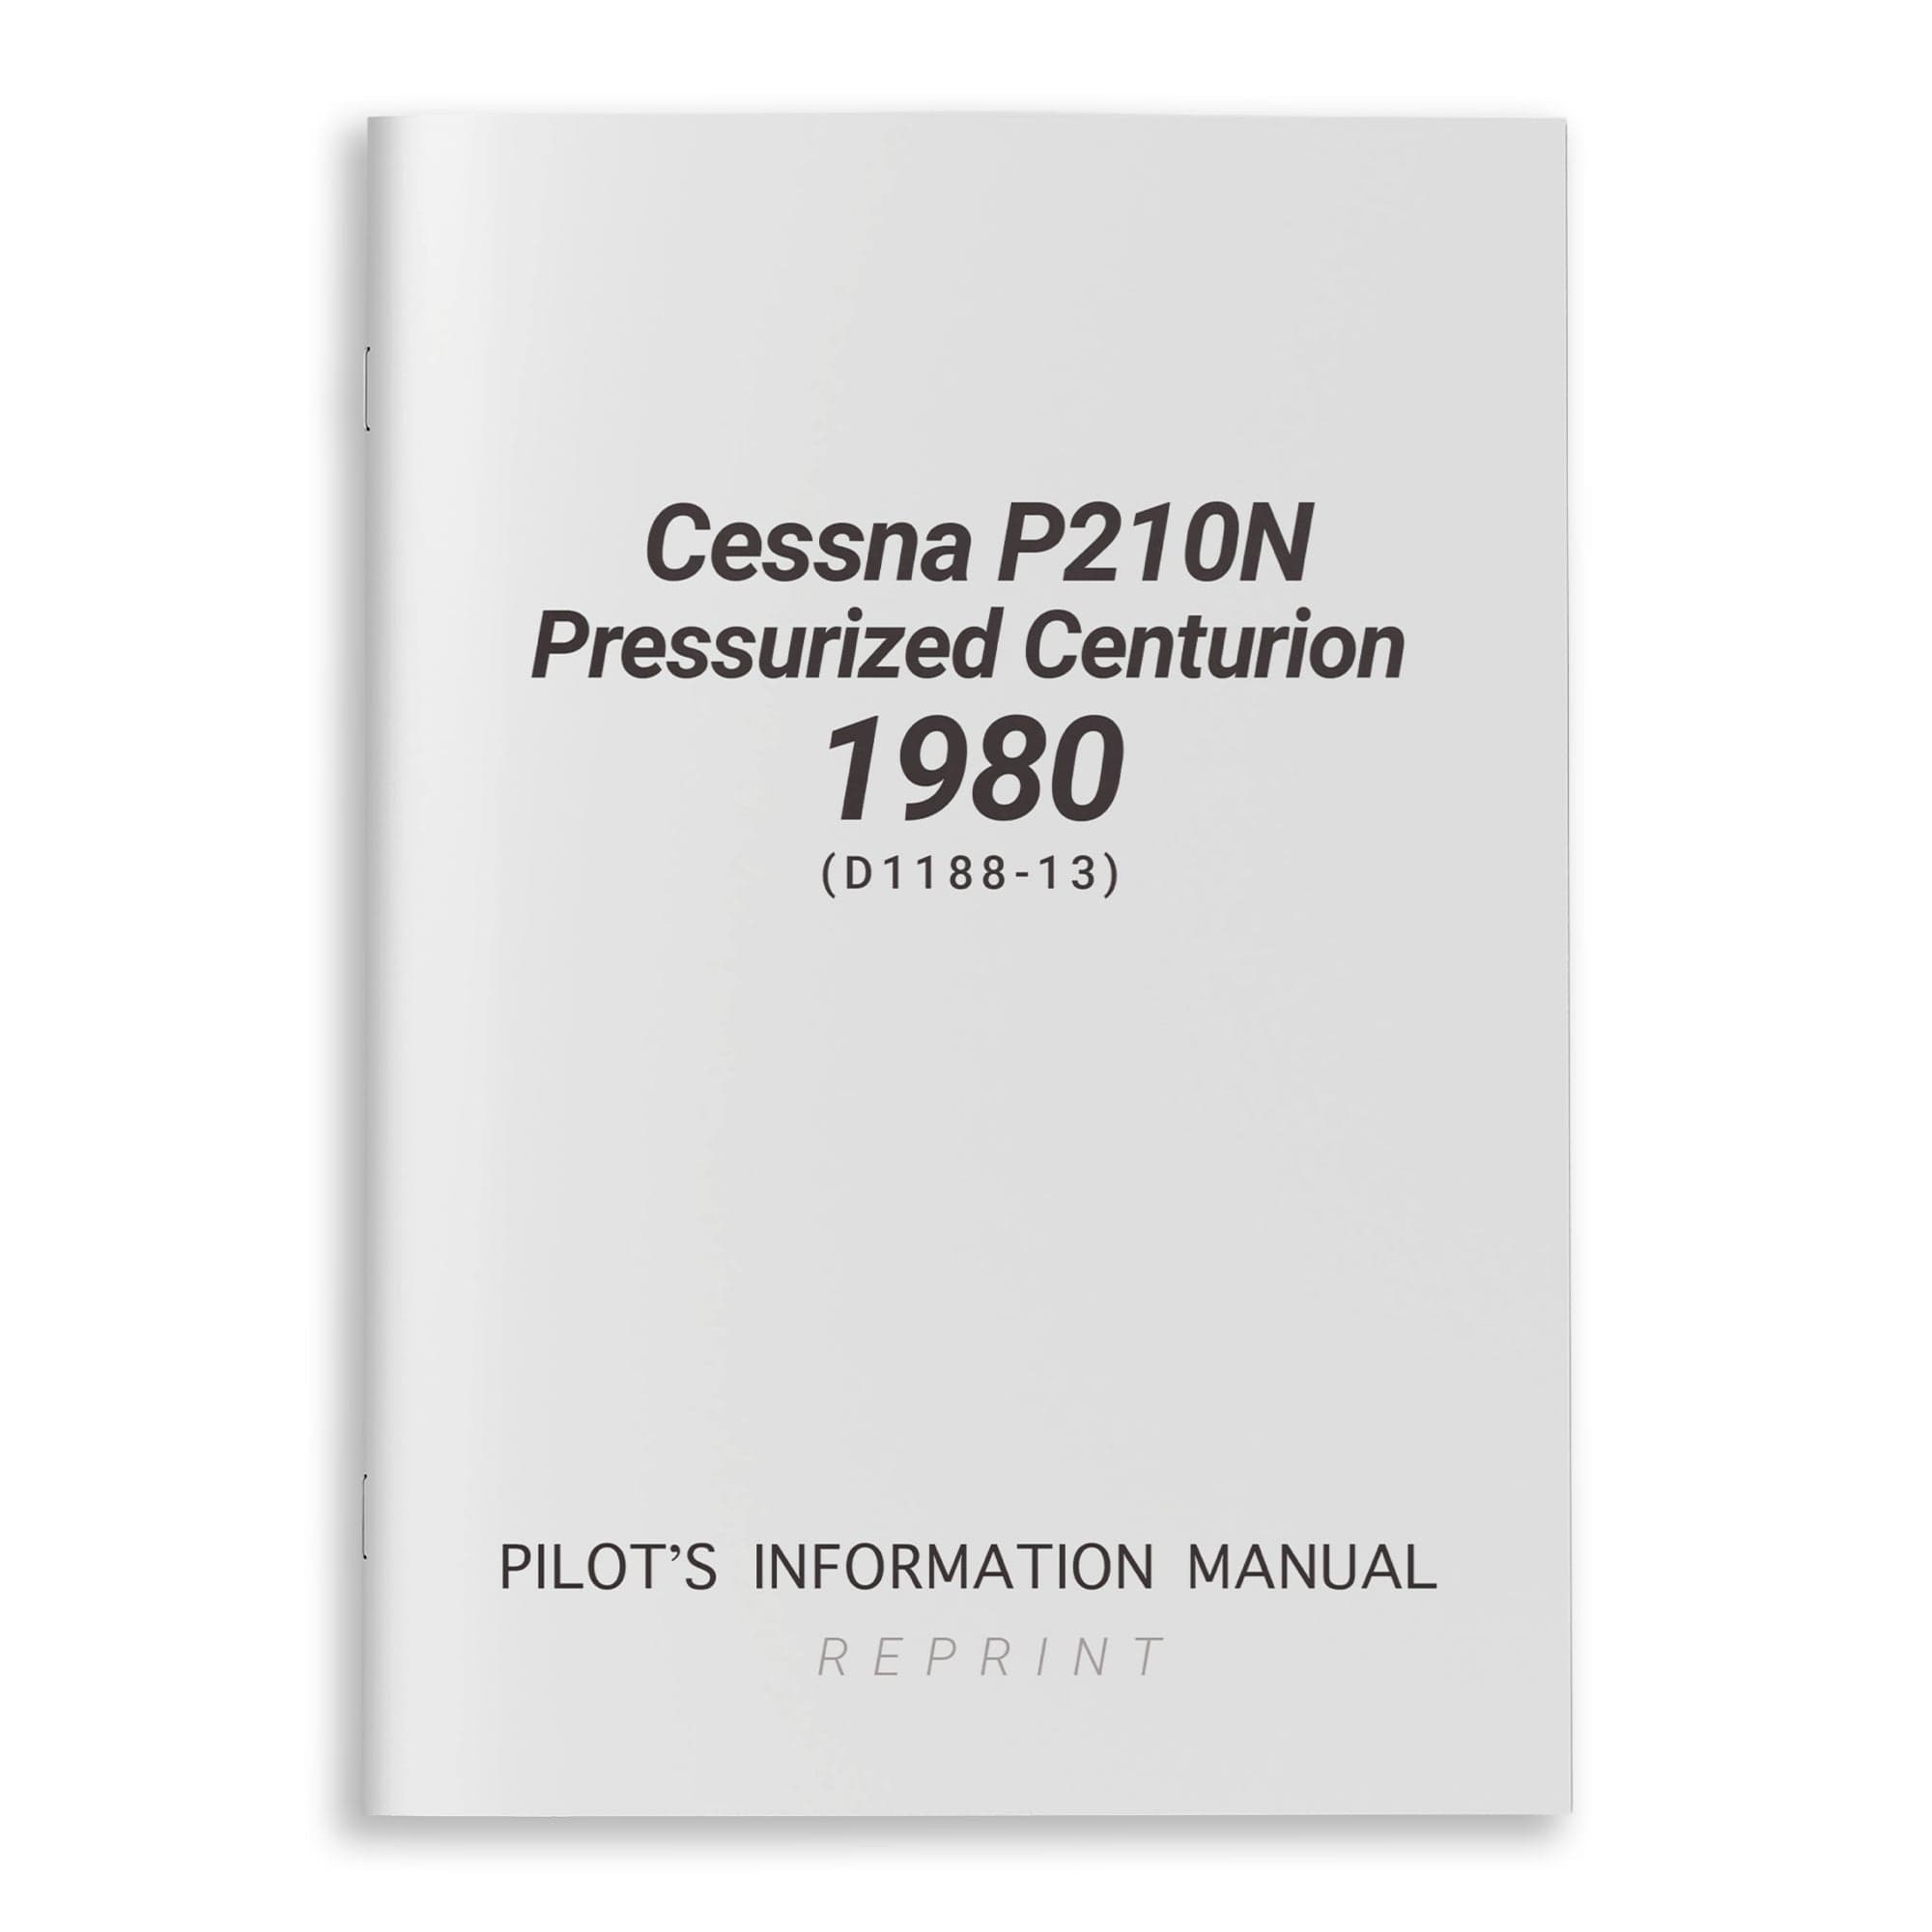 Cessna P210N Pressurized Centurion 1980 Pilot's Information Manual (D1188-13)